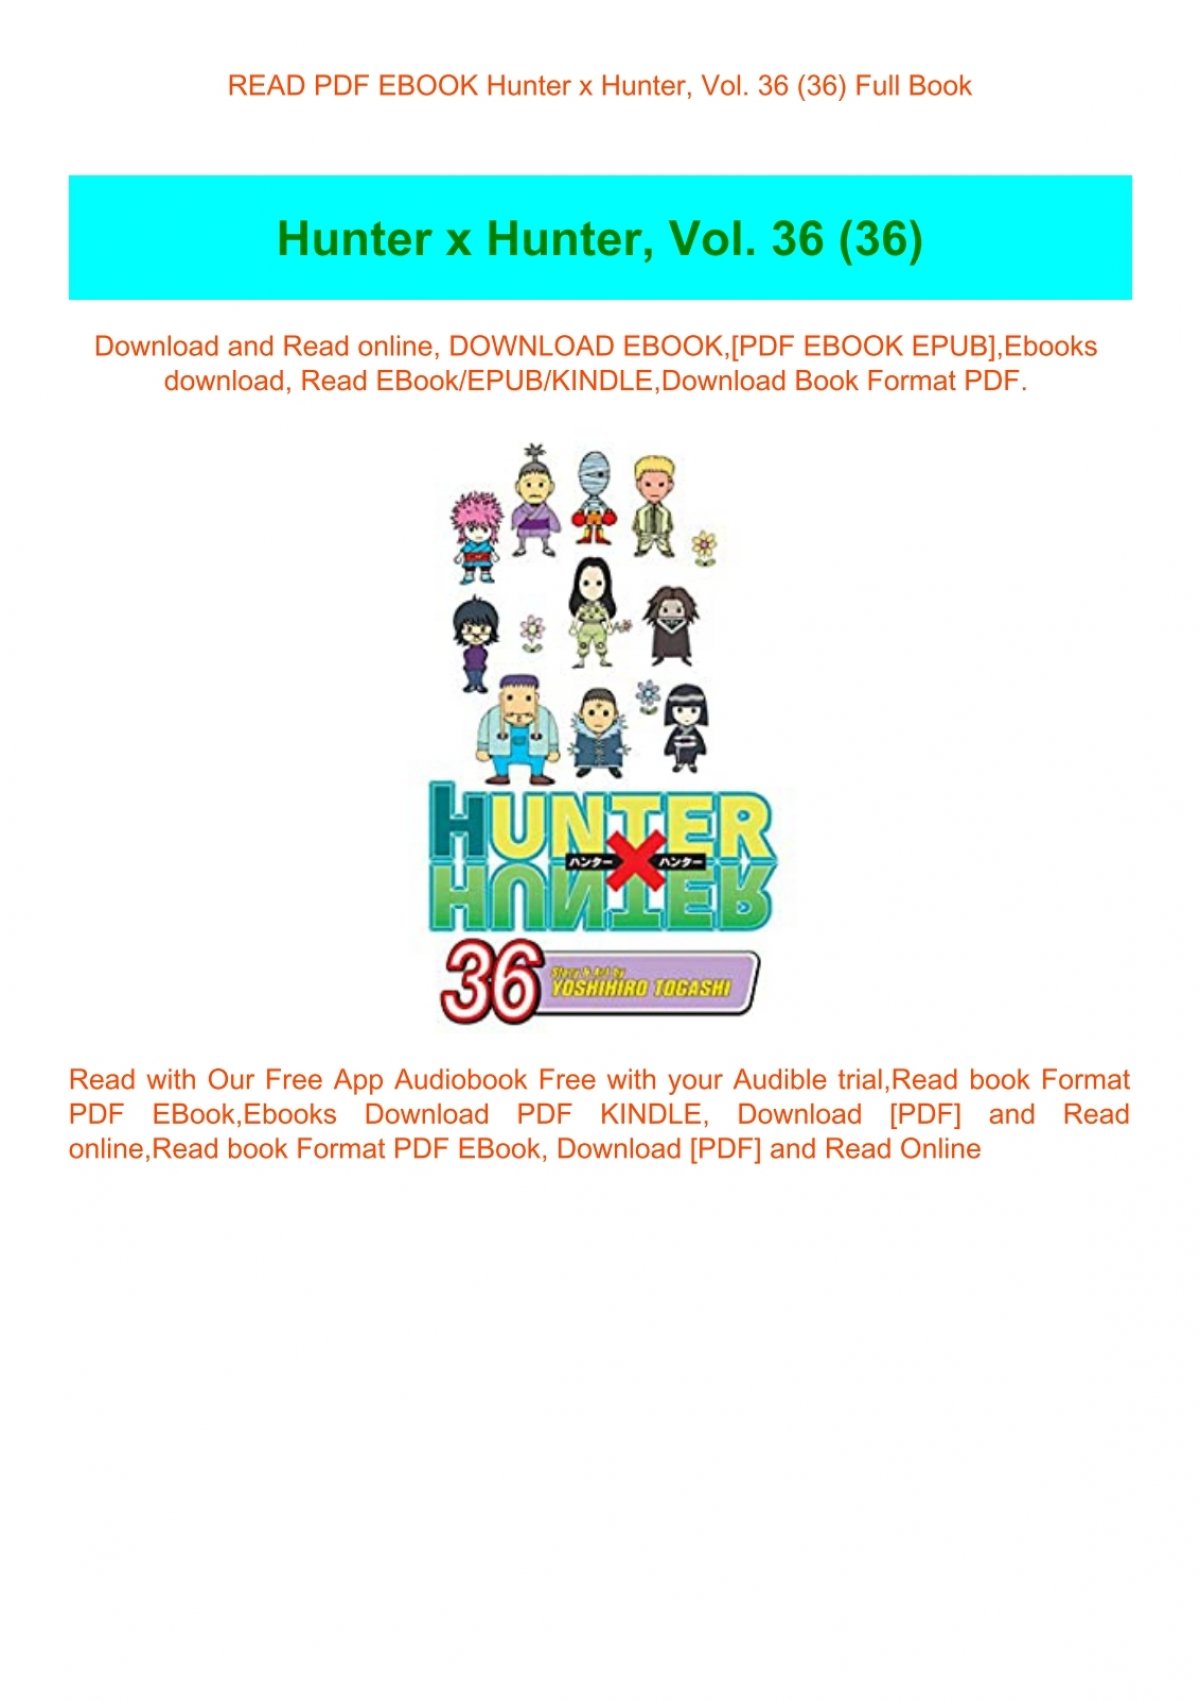 Read Pdf Ebook Hunter X Hunter Vol 36 36 Full Book